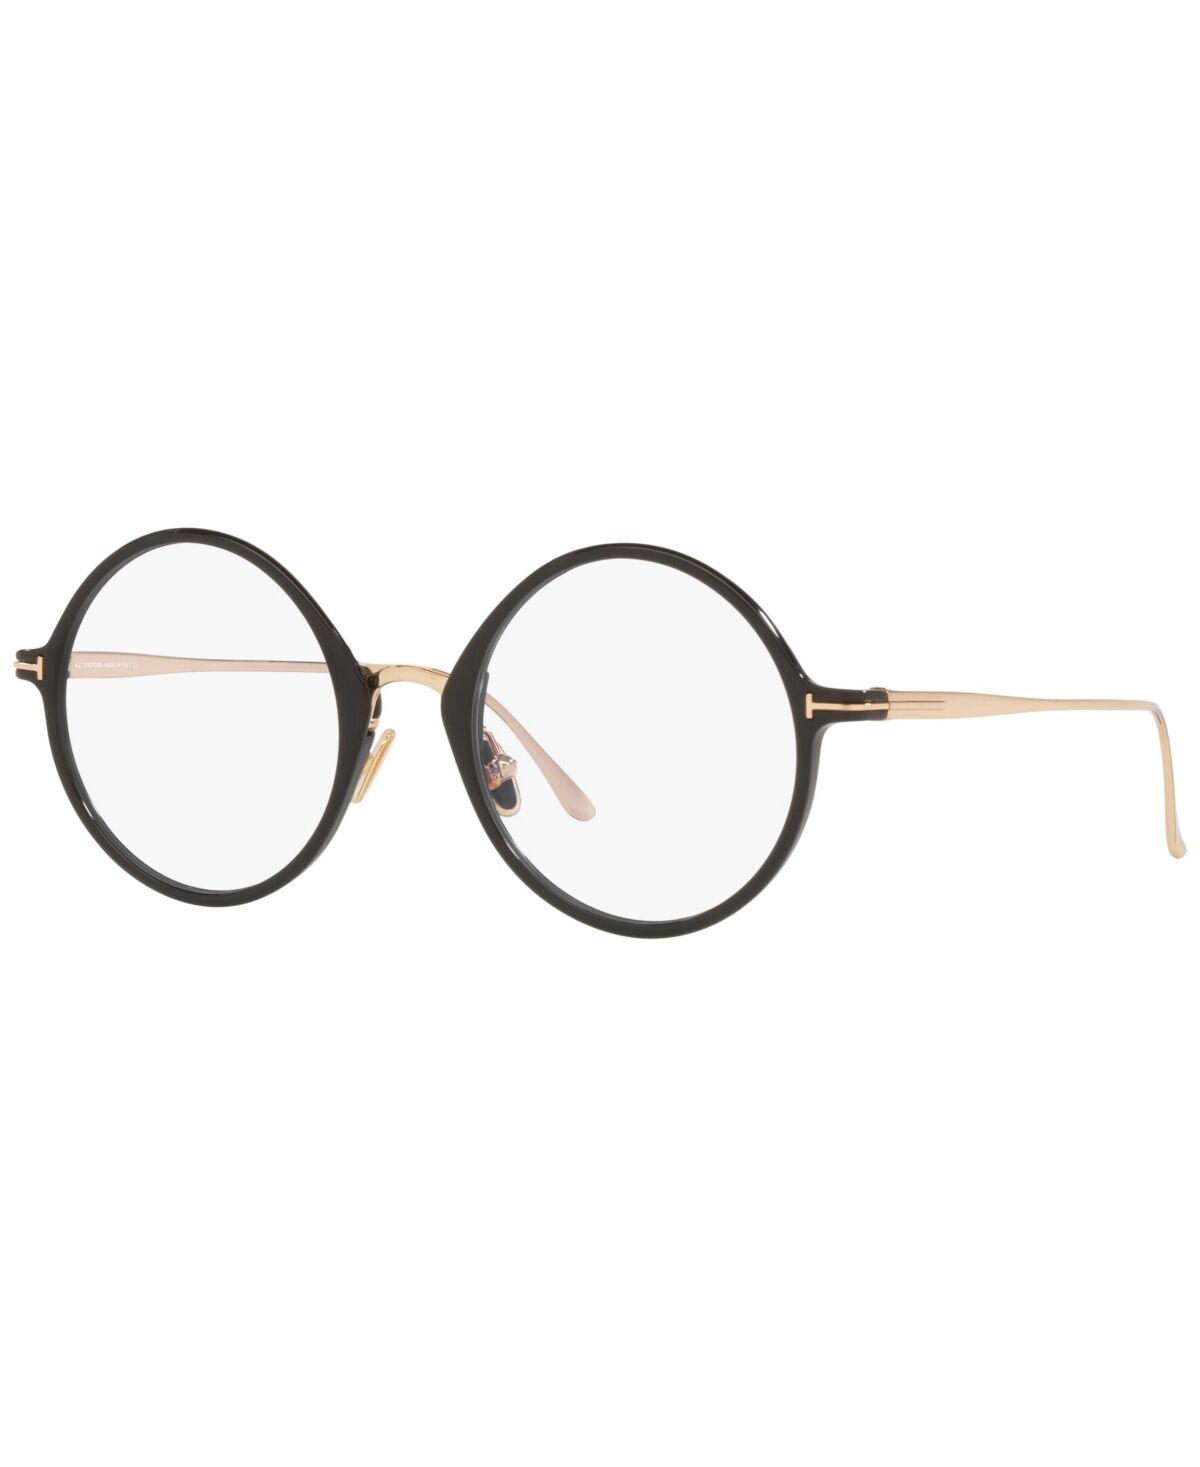 Tom Ford TR001335 Women's Round Eyeglasses - Gold Tone Pink Shiny